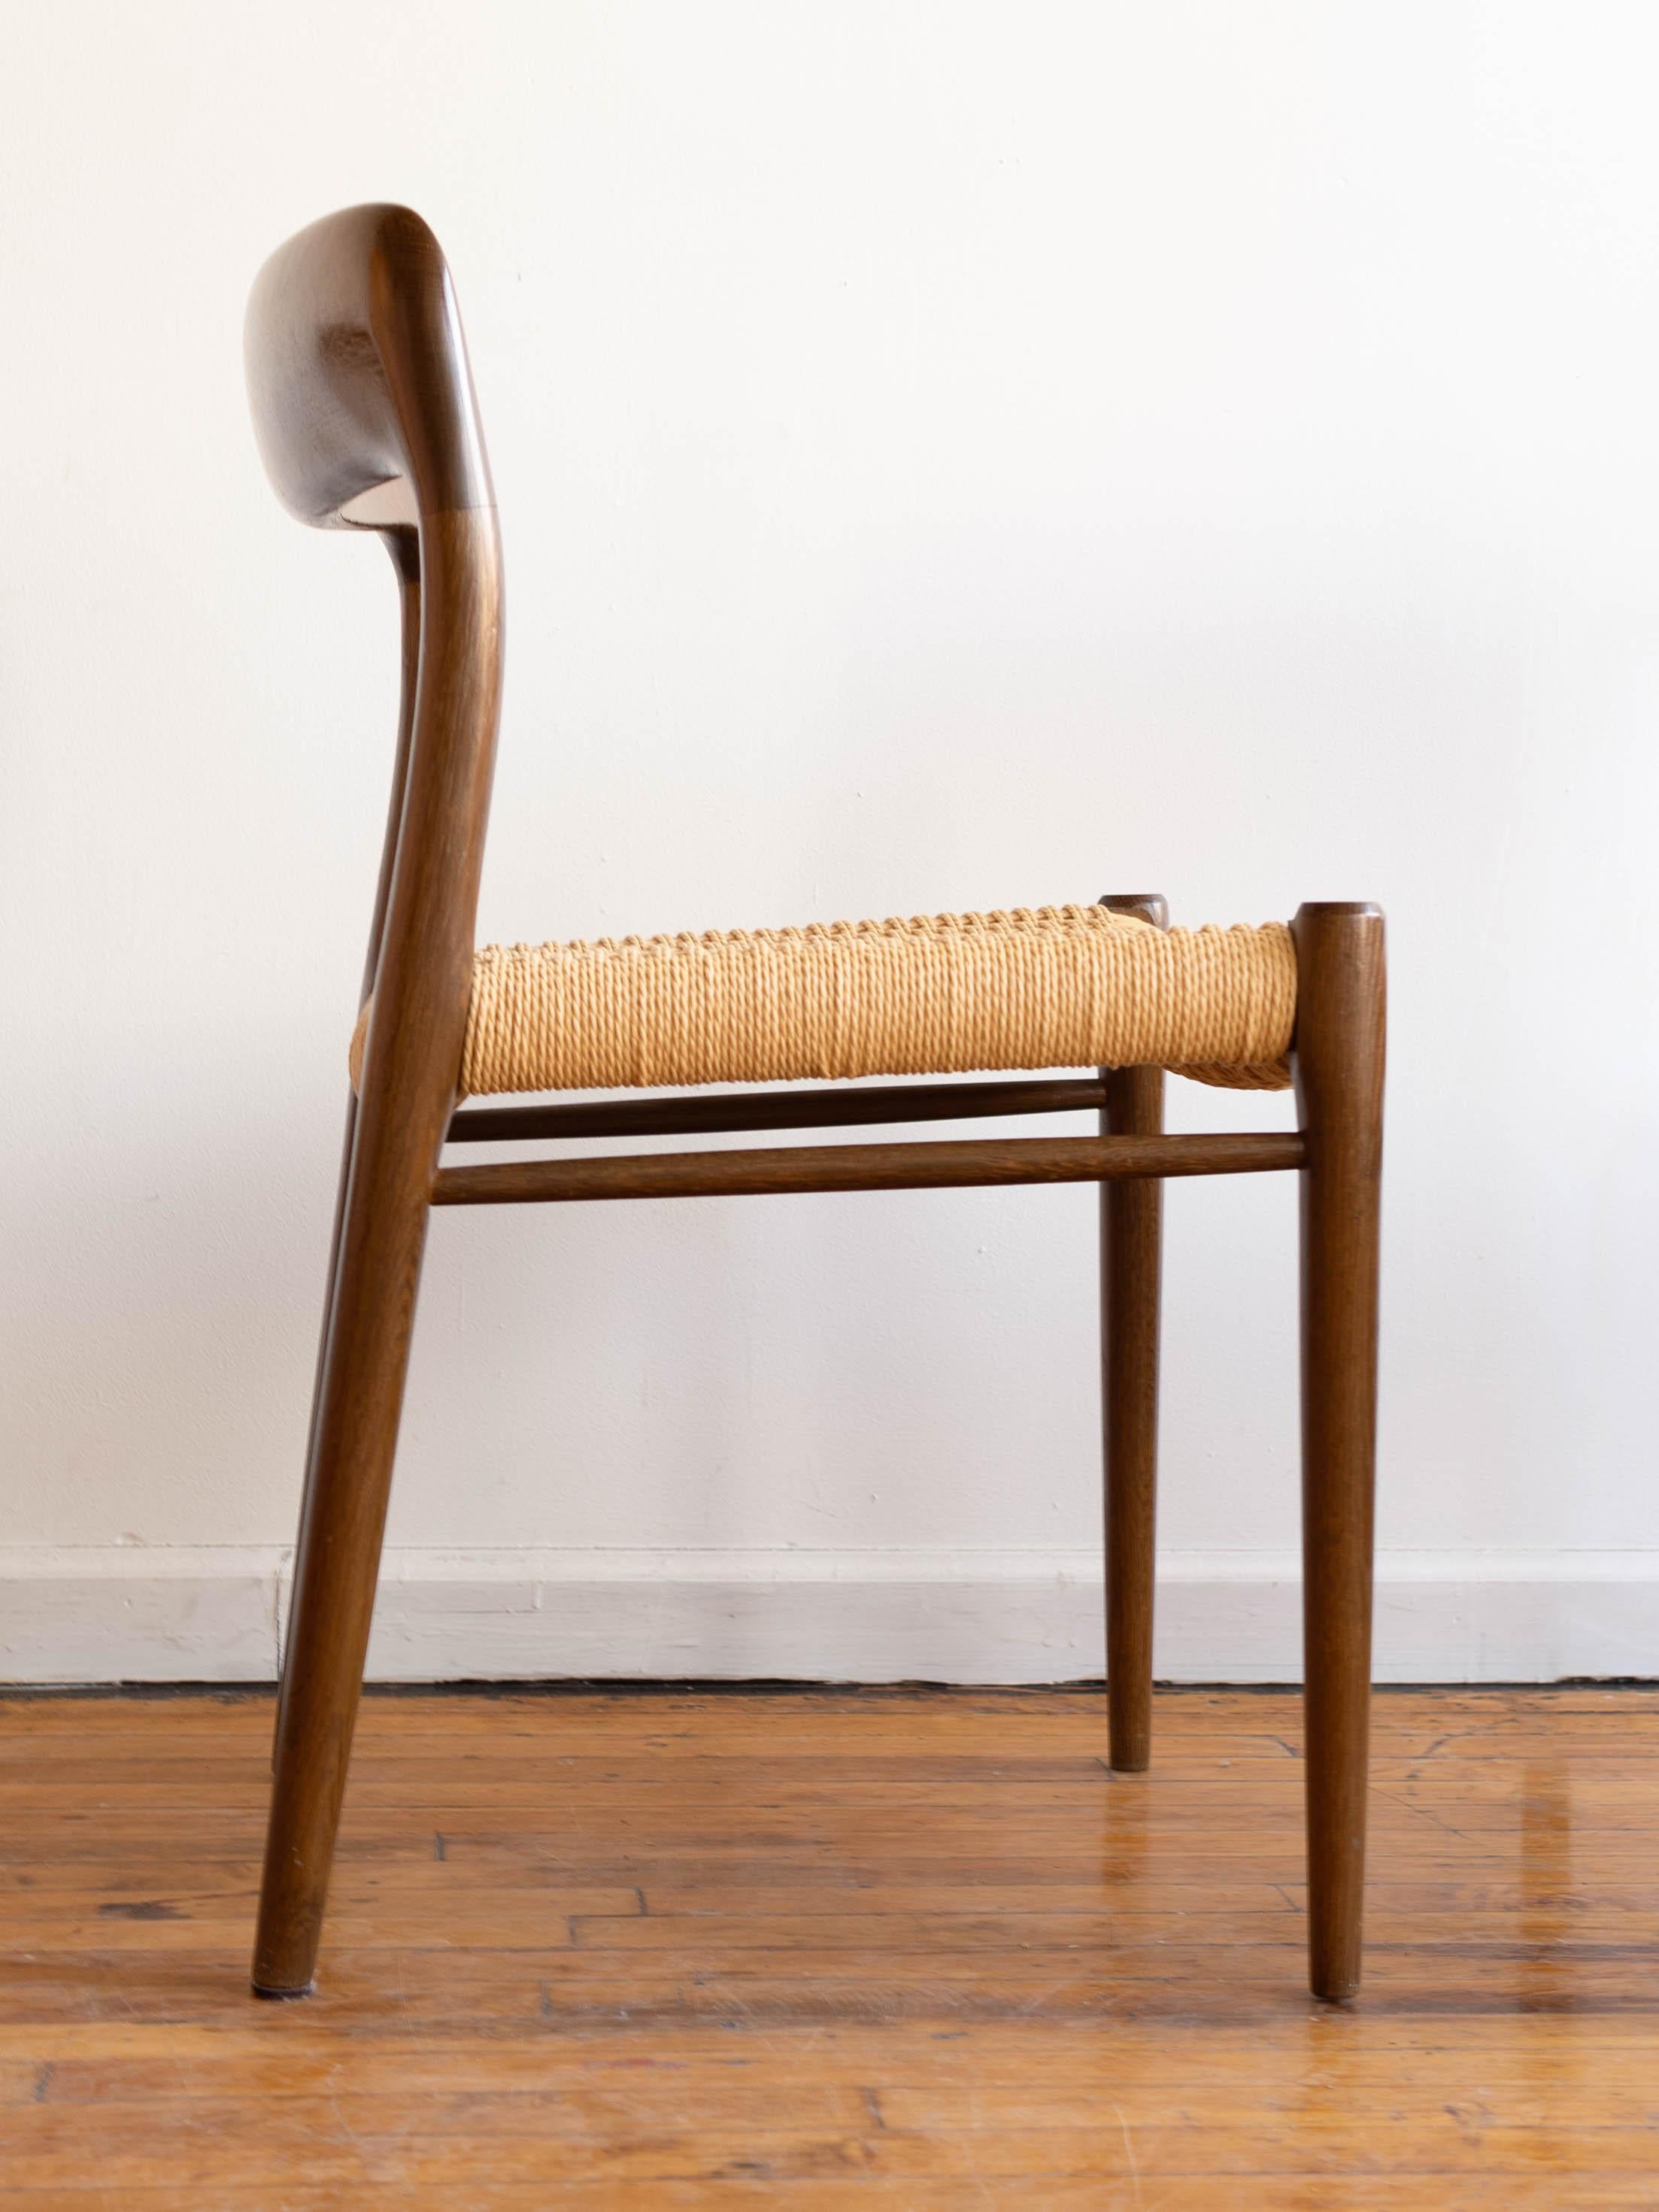 1960s Mid-Century Modern Danish Moller 75 Chairs in Wenge Wood - Set of 4 1